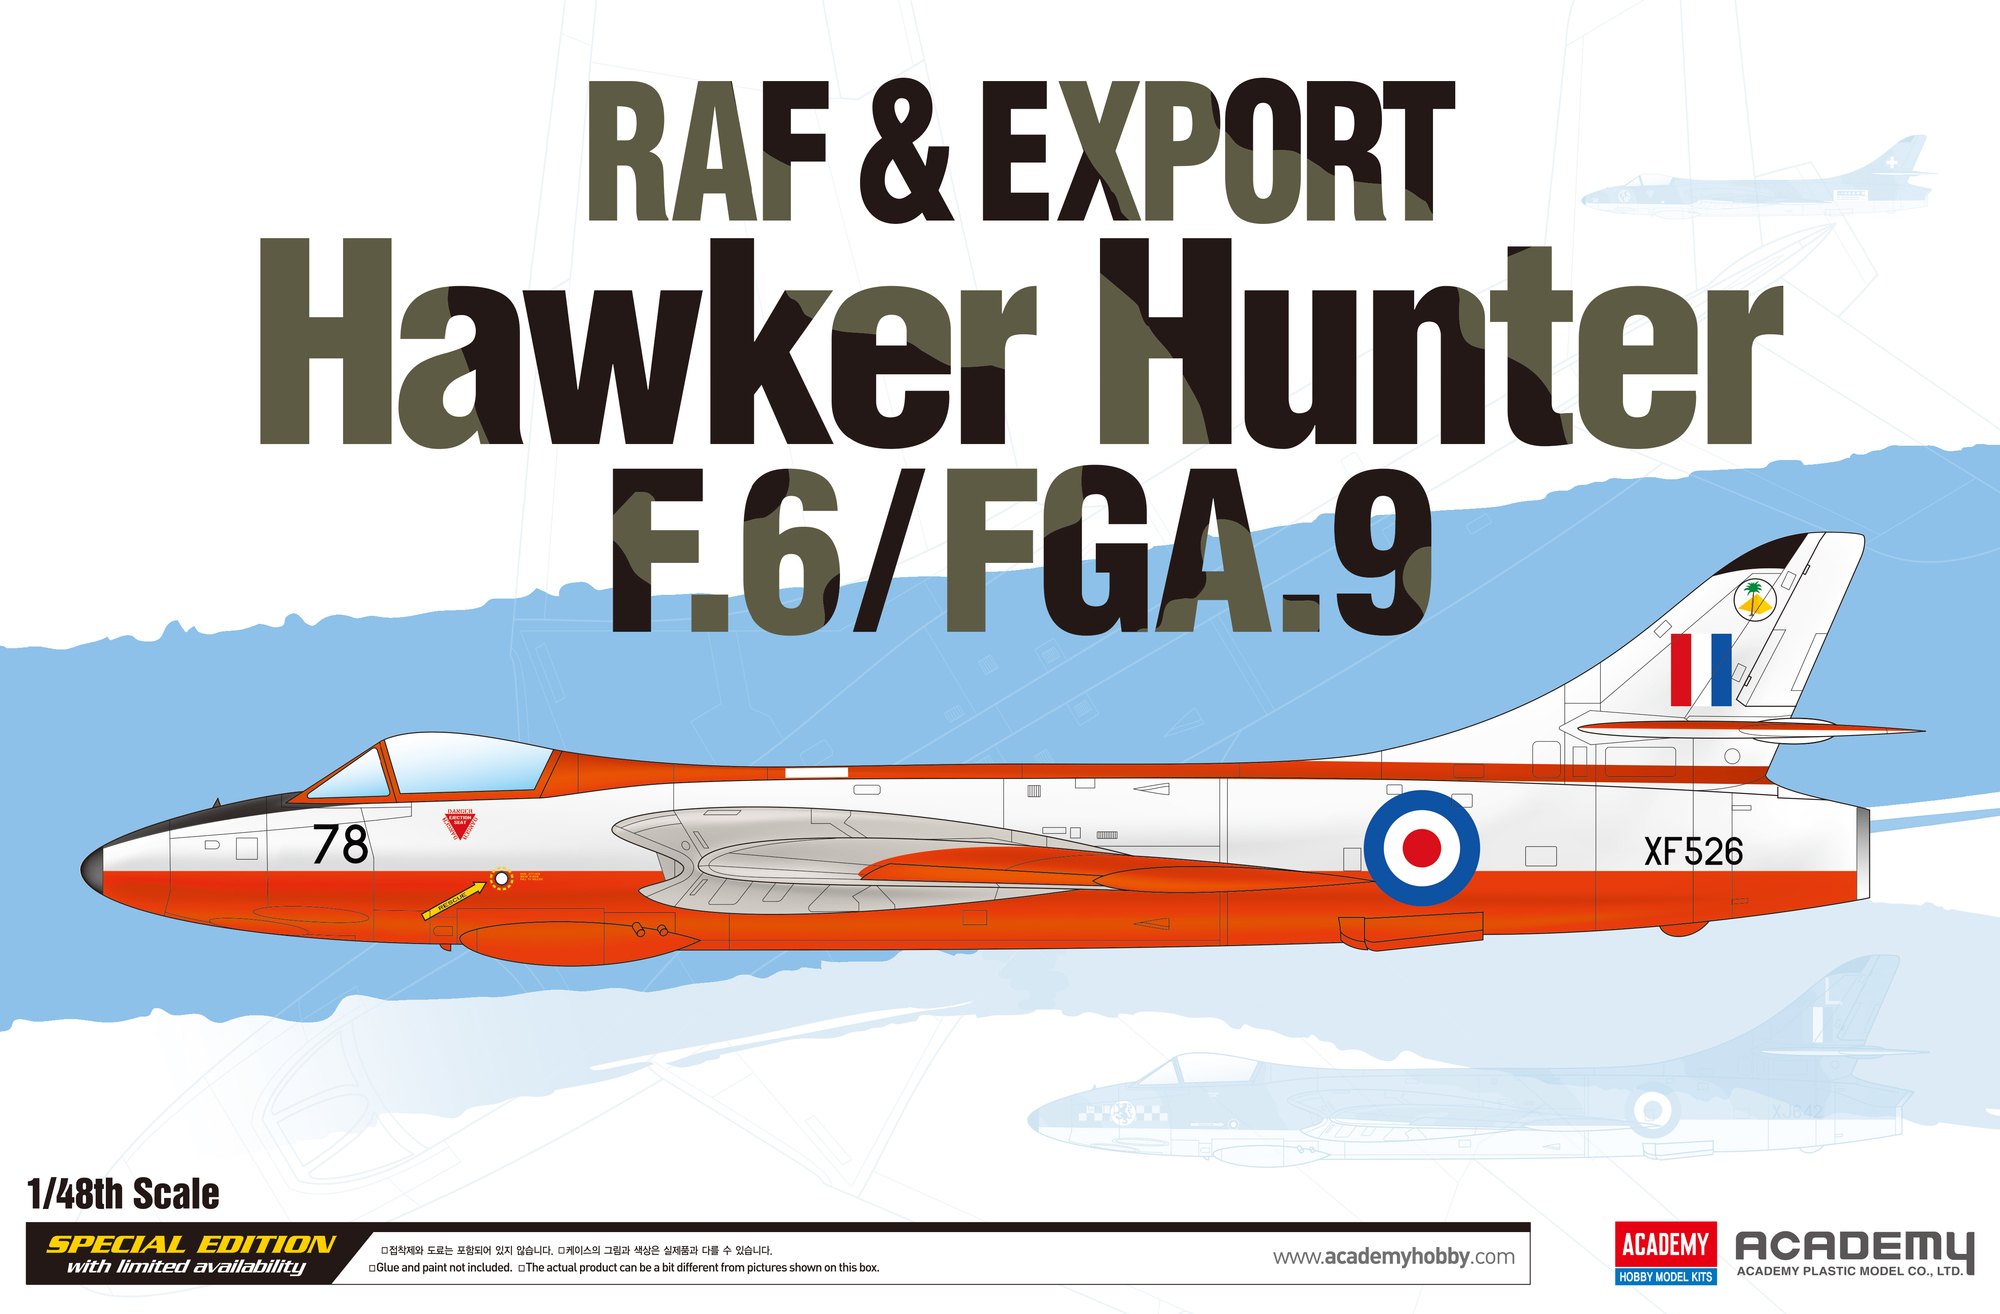 Model Kit letadlo 12312 - RAF & Export Hawker Hunter F.6 / FGA.9 (1:48)